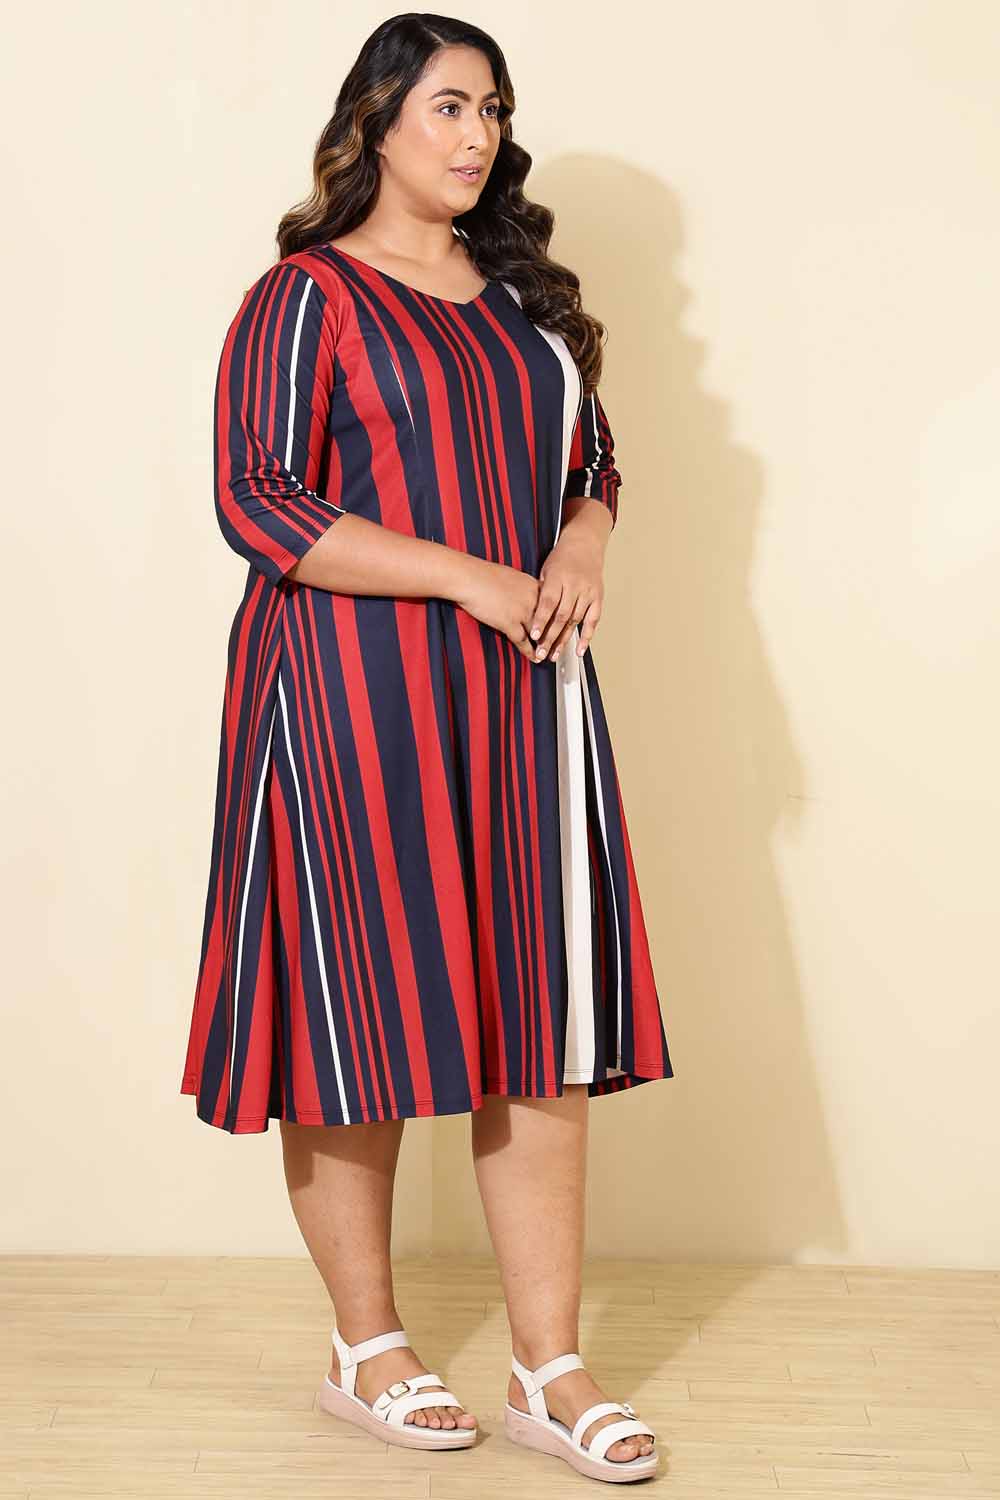 Plus Size Plus Size Red Blue Striped A line Dress